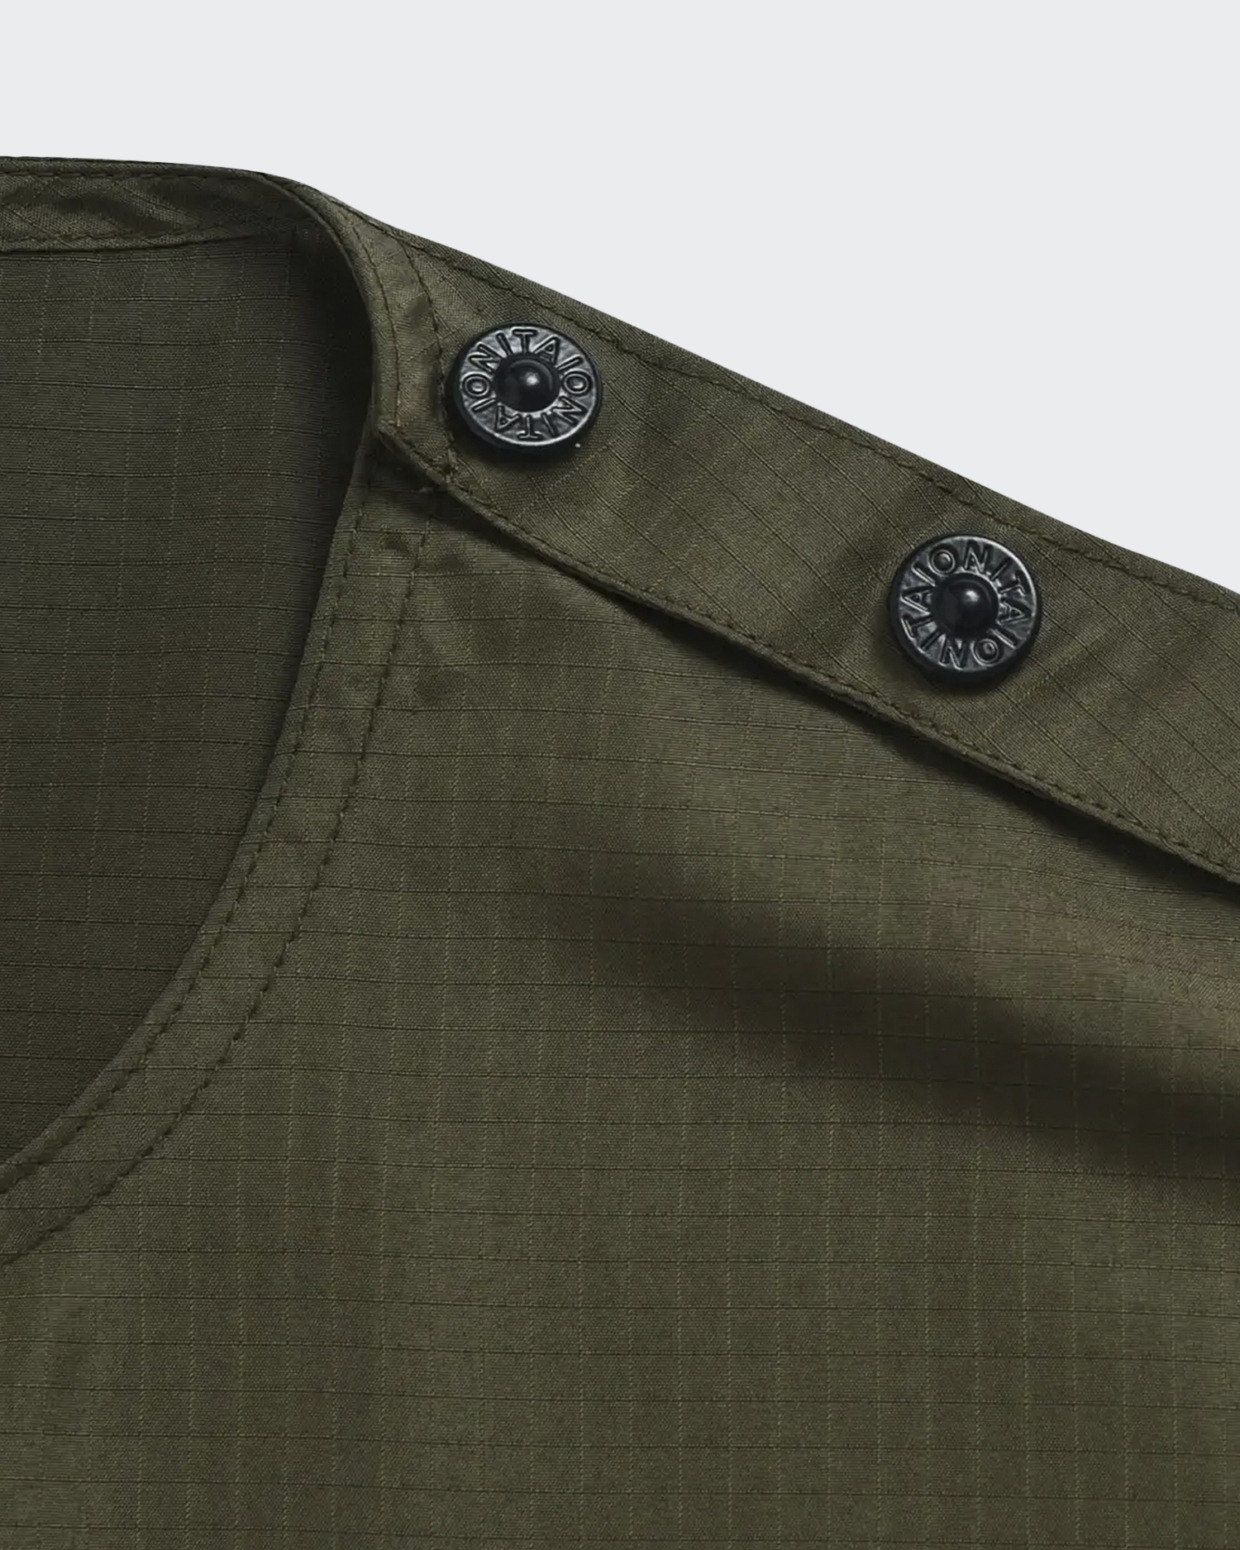 Taion Military Half Sleeve Cut Sew